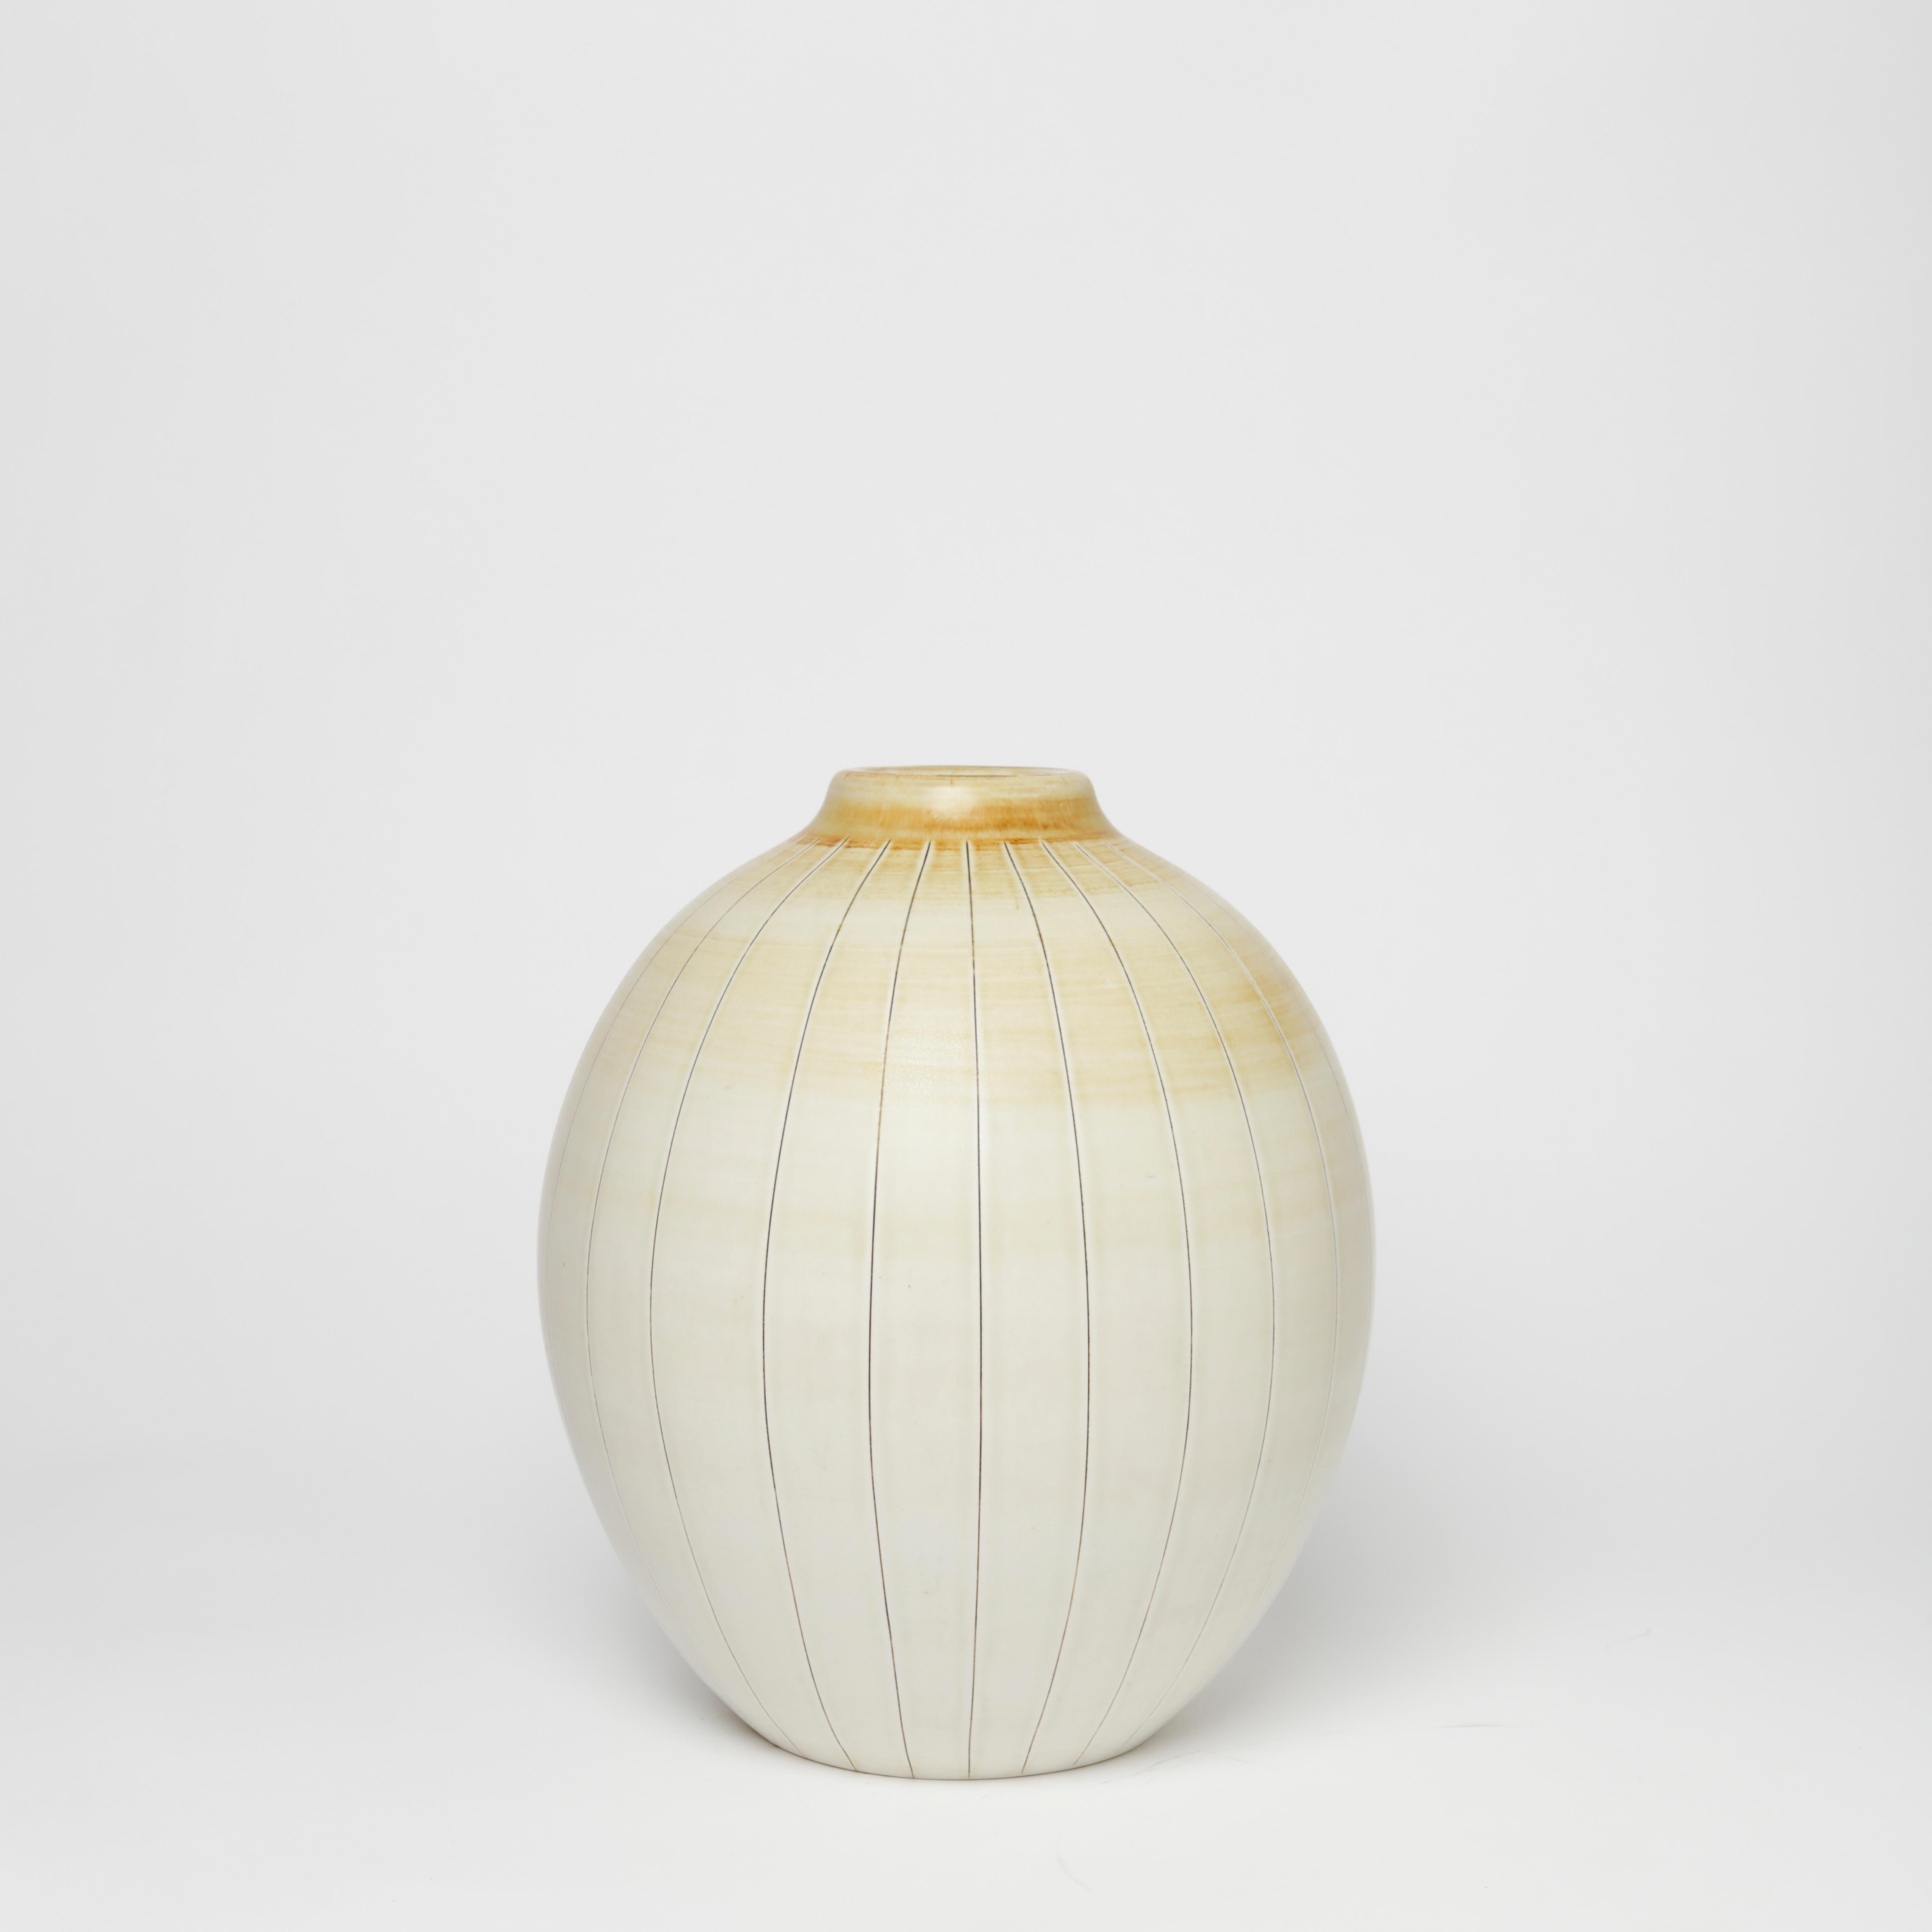 Stoneware vase by Gertrud Lönegren for Rörstrand 1940s with light beige glaze.
Measure: Height 26.5cm/10.4